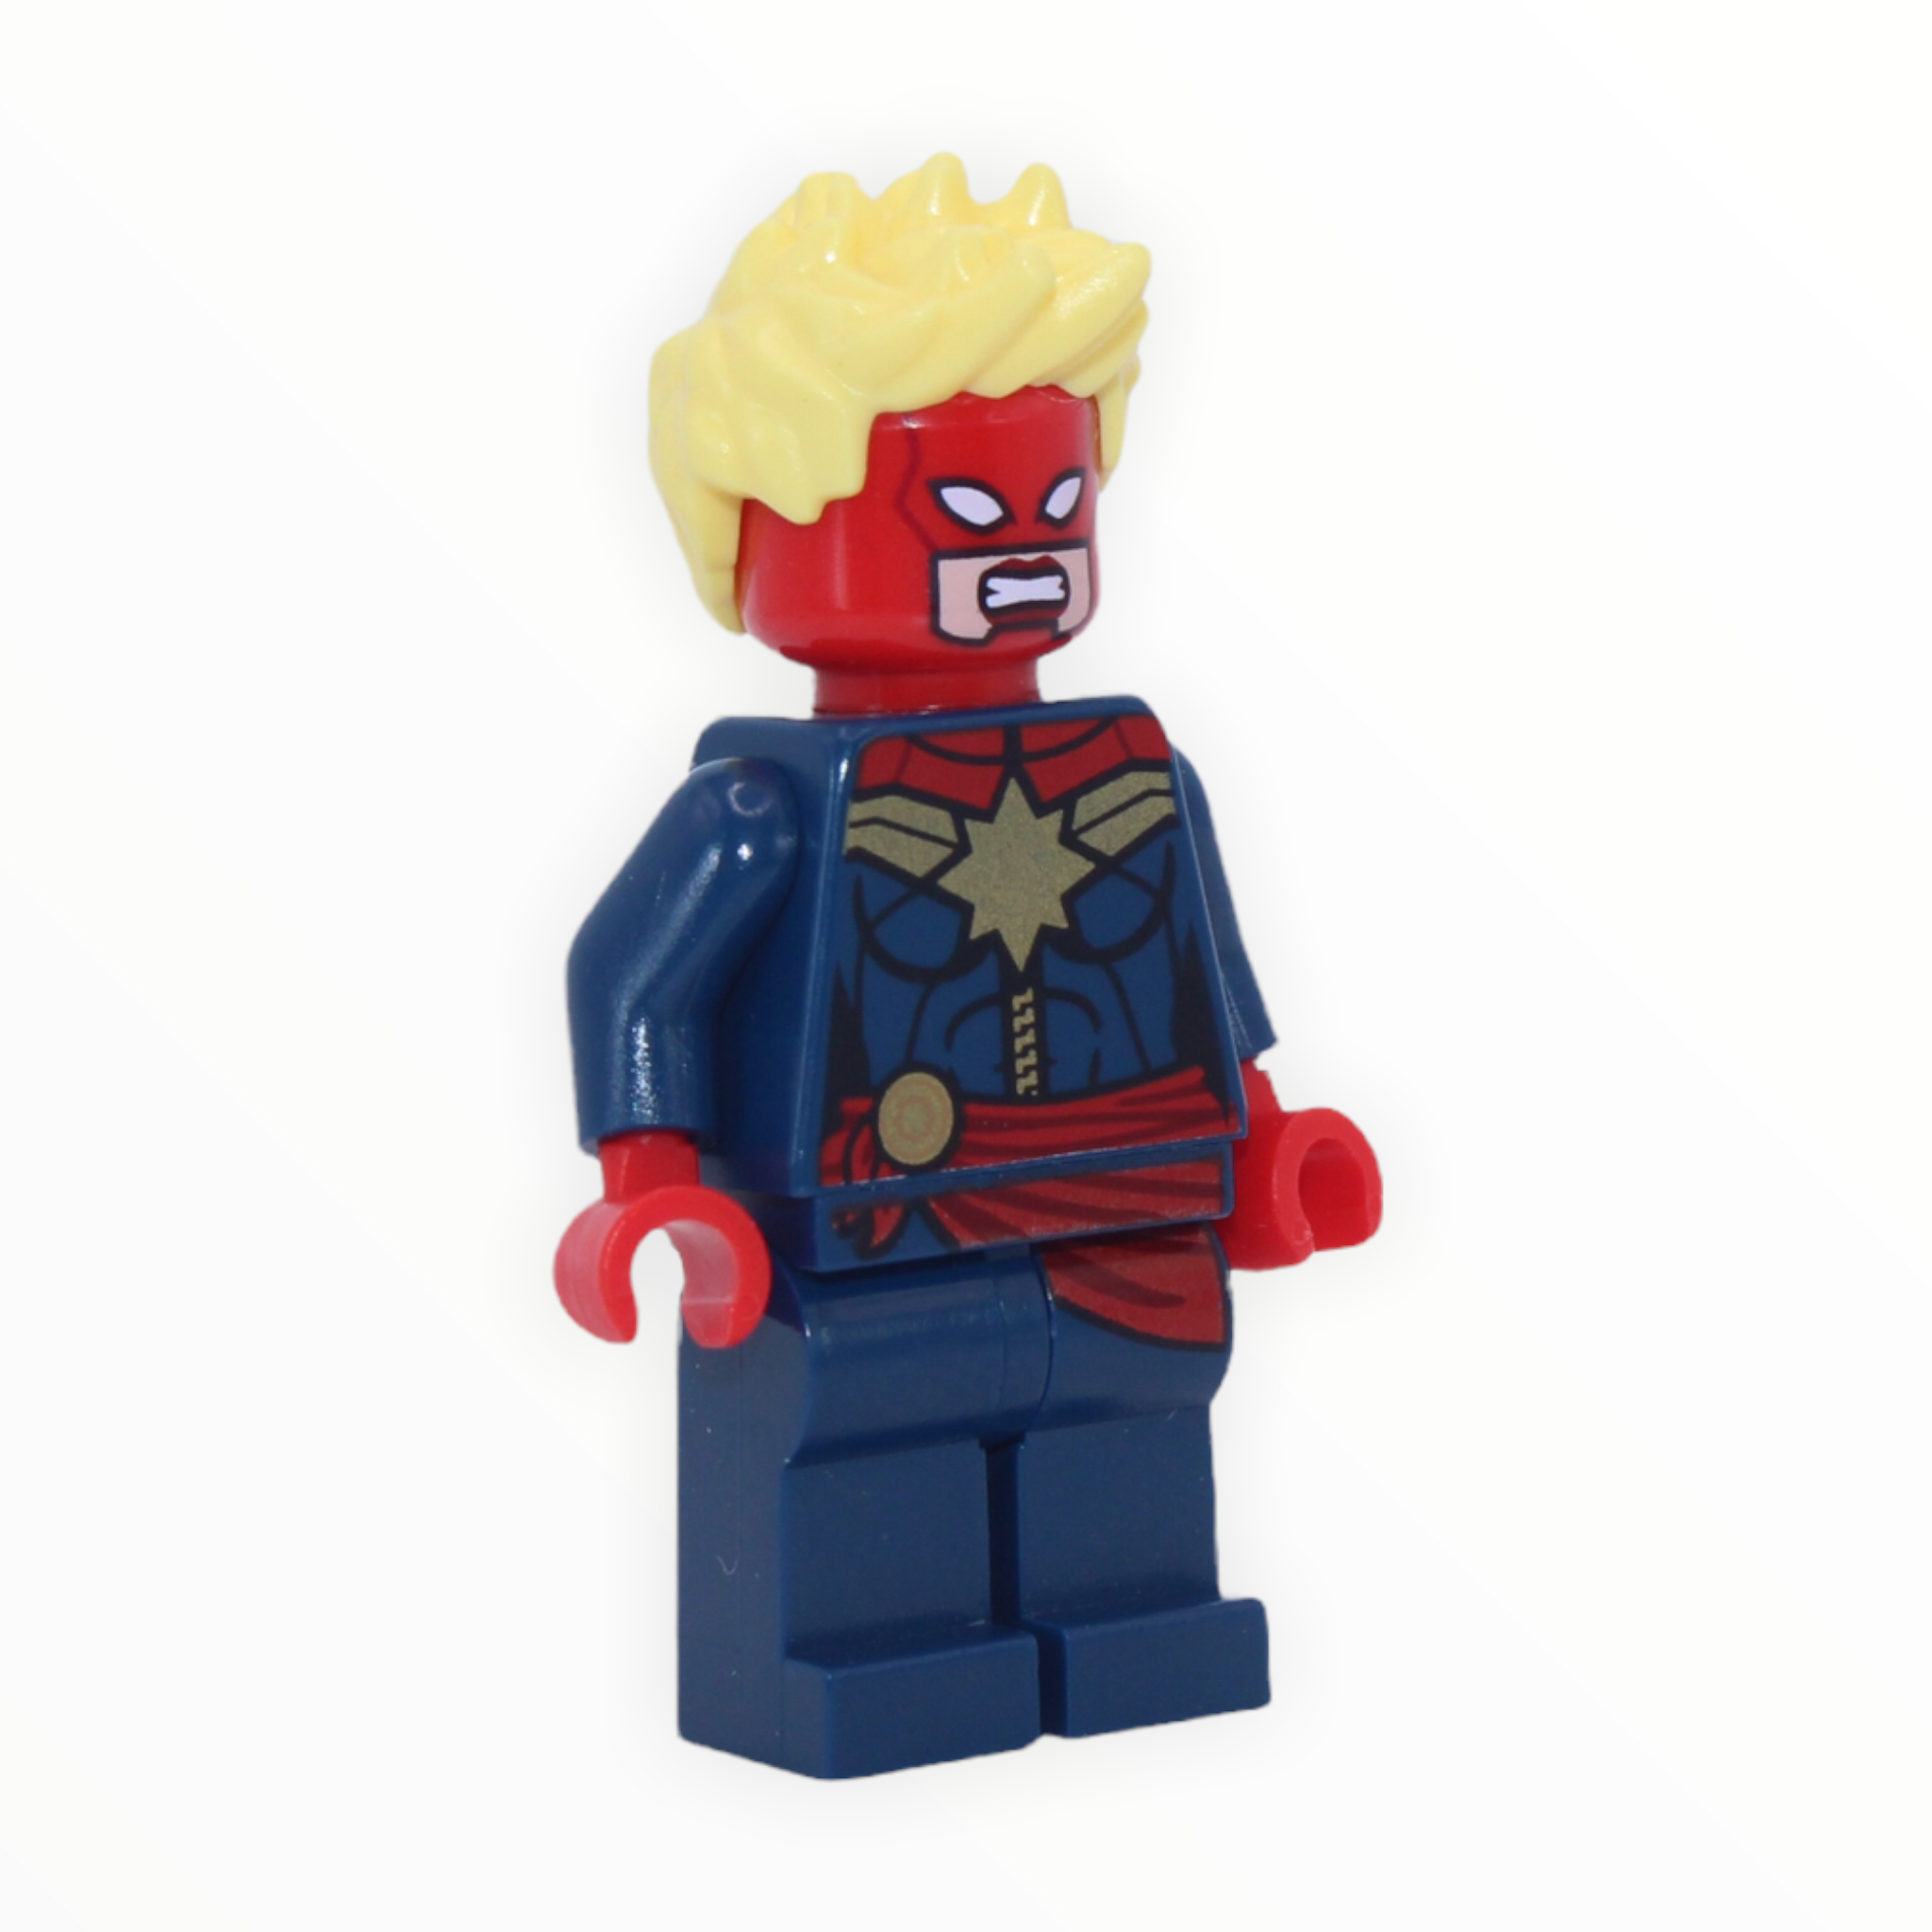 Captain Marvel (red mask, red sash, 2016)